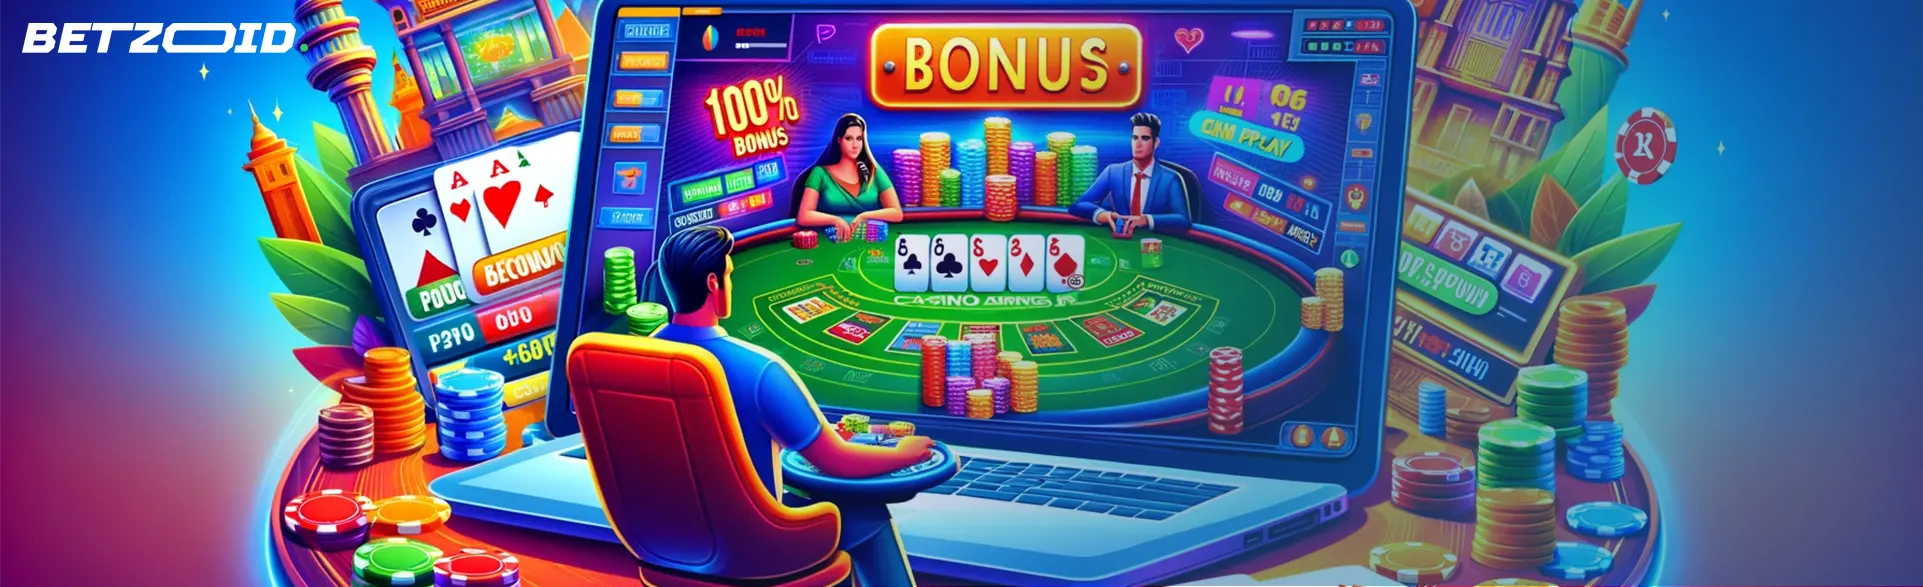 Online casino on laptop with 100% bonus offer.